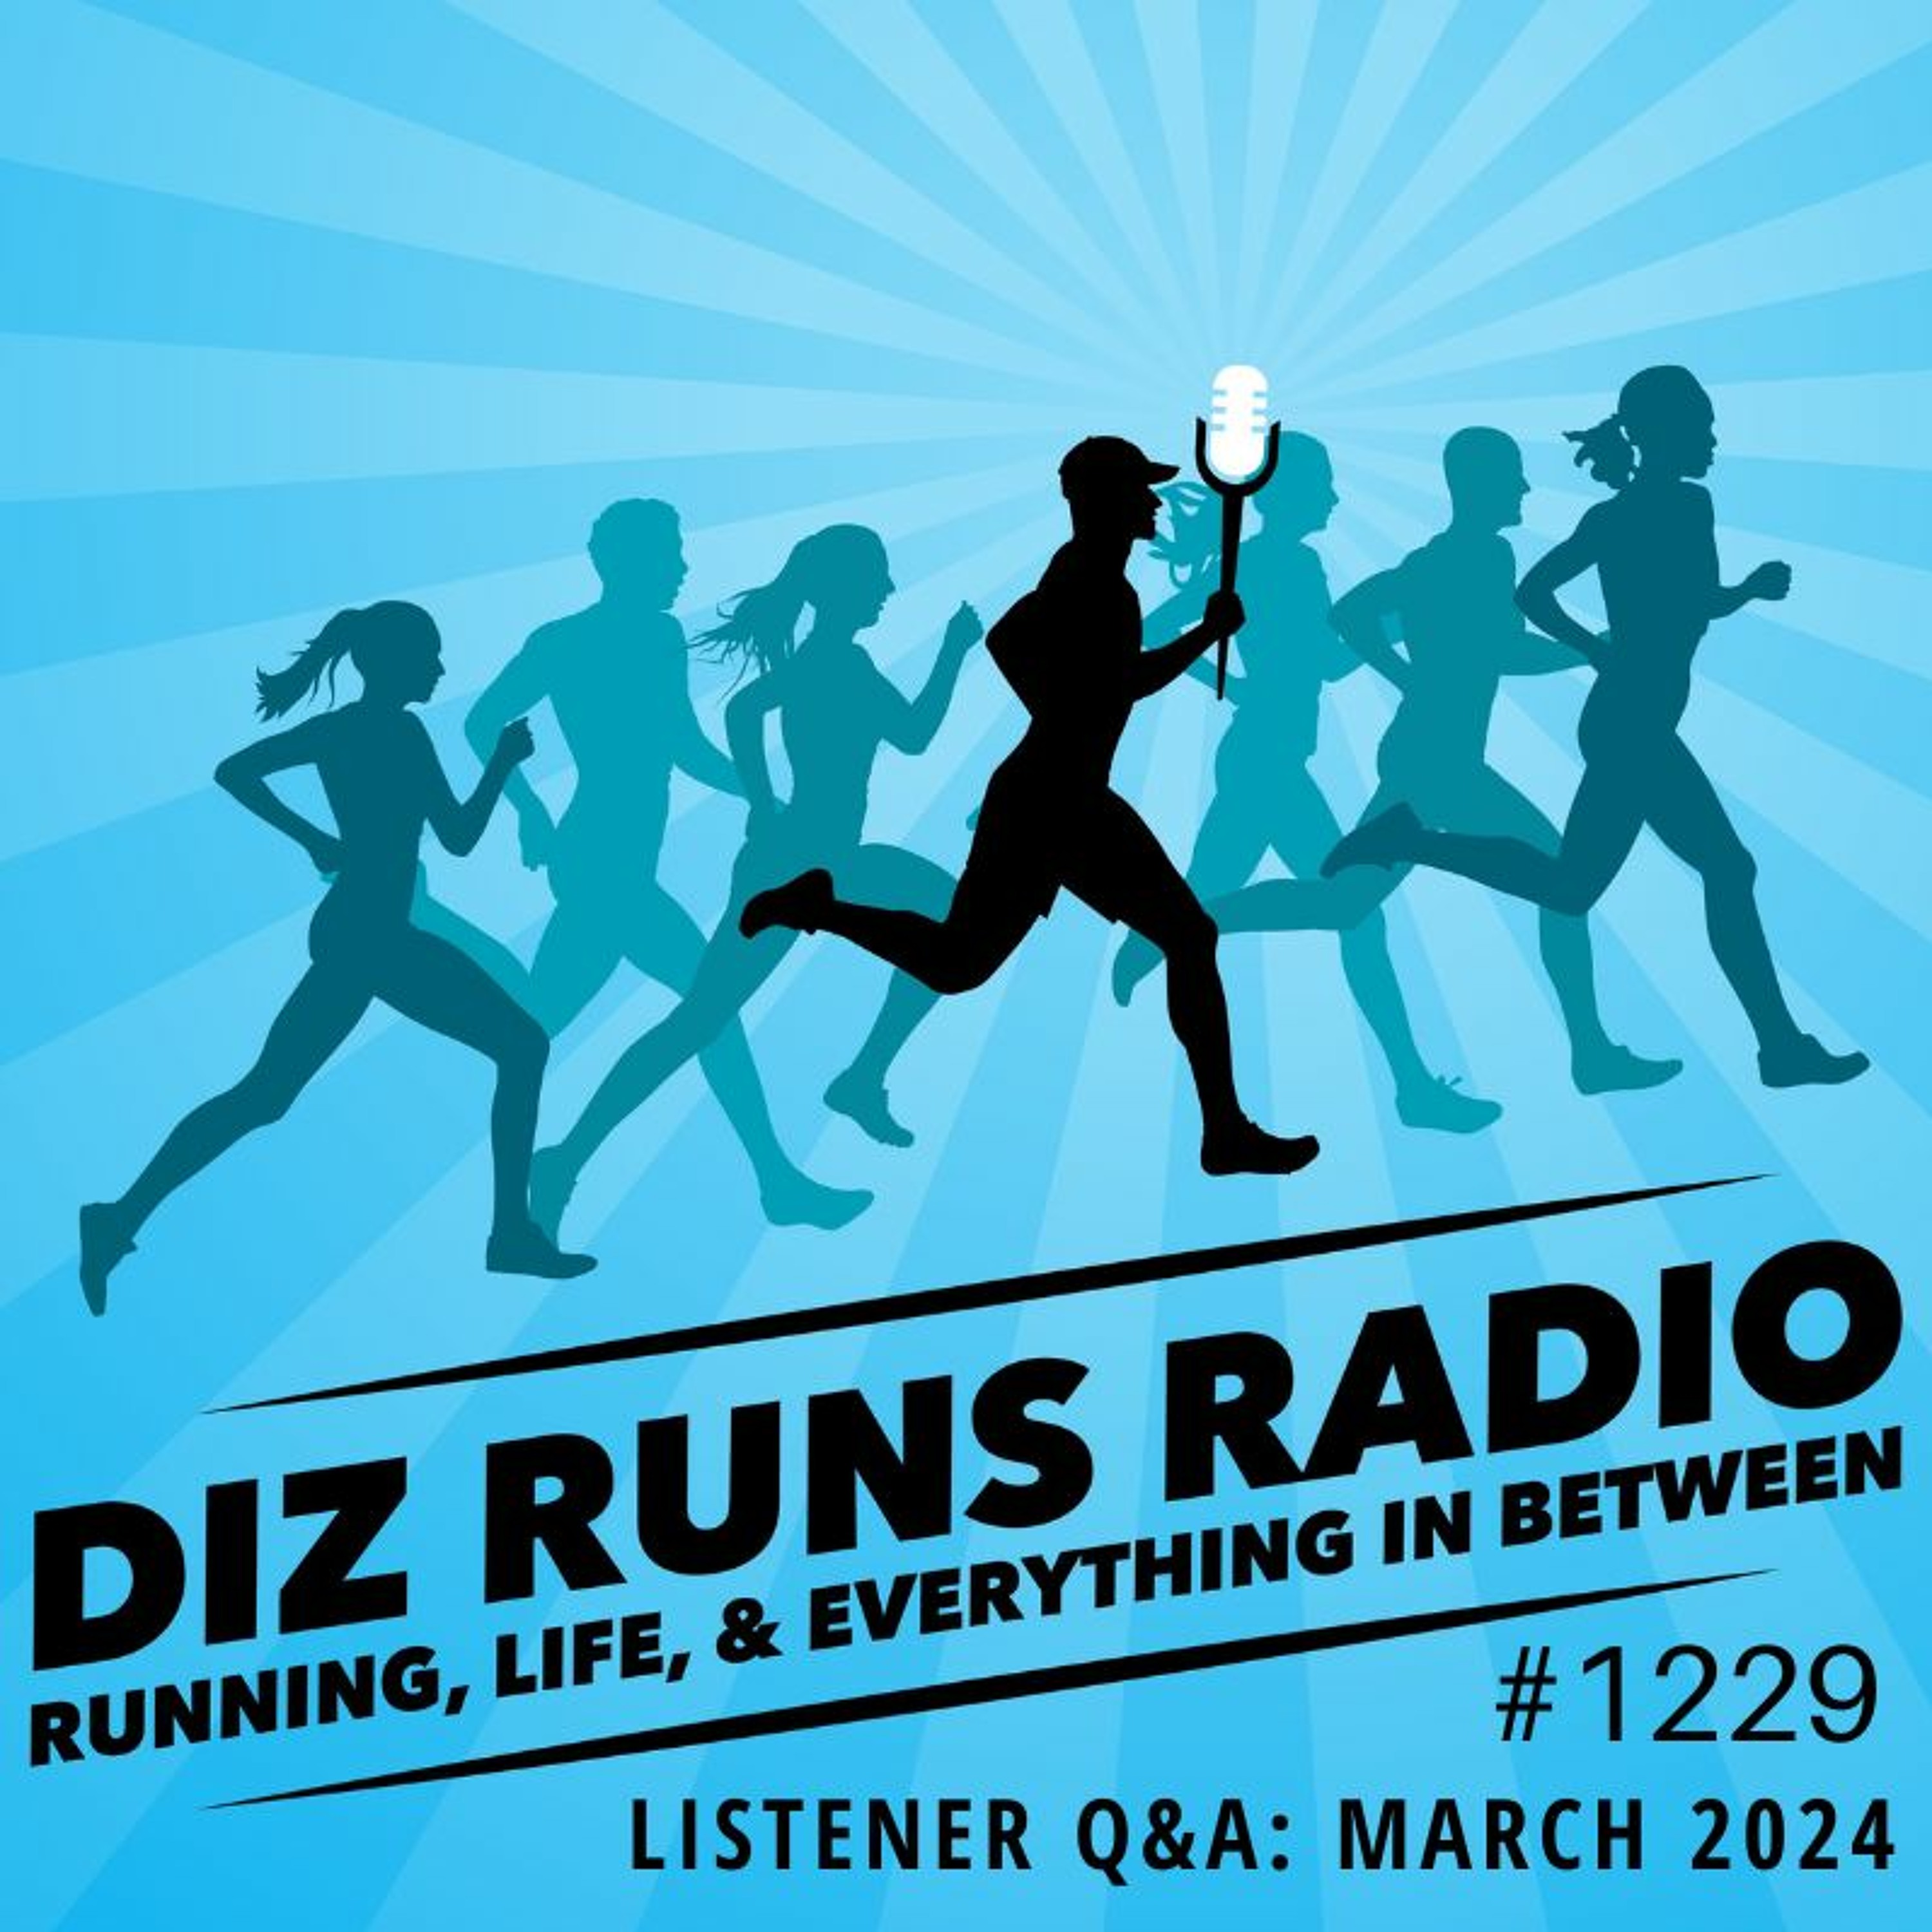 1229 Listener Q&A: March 2024